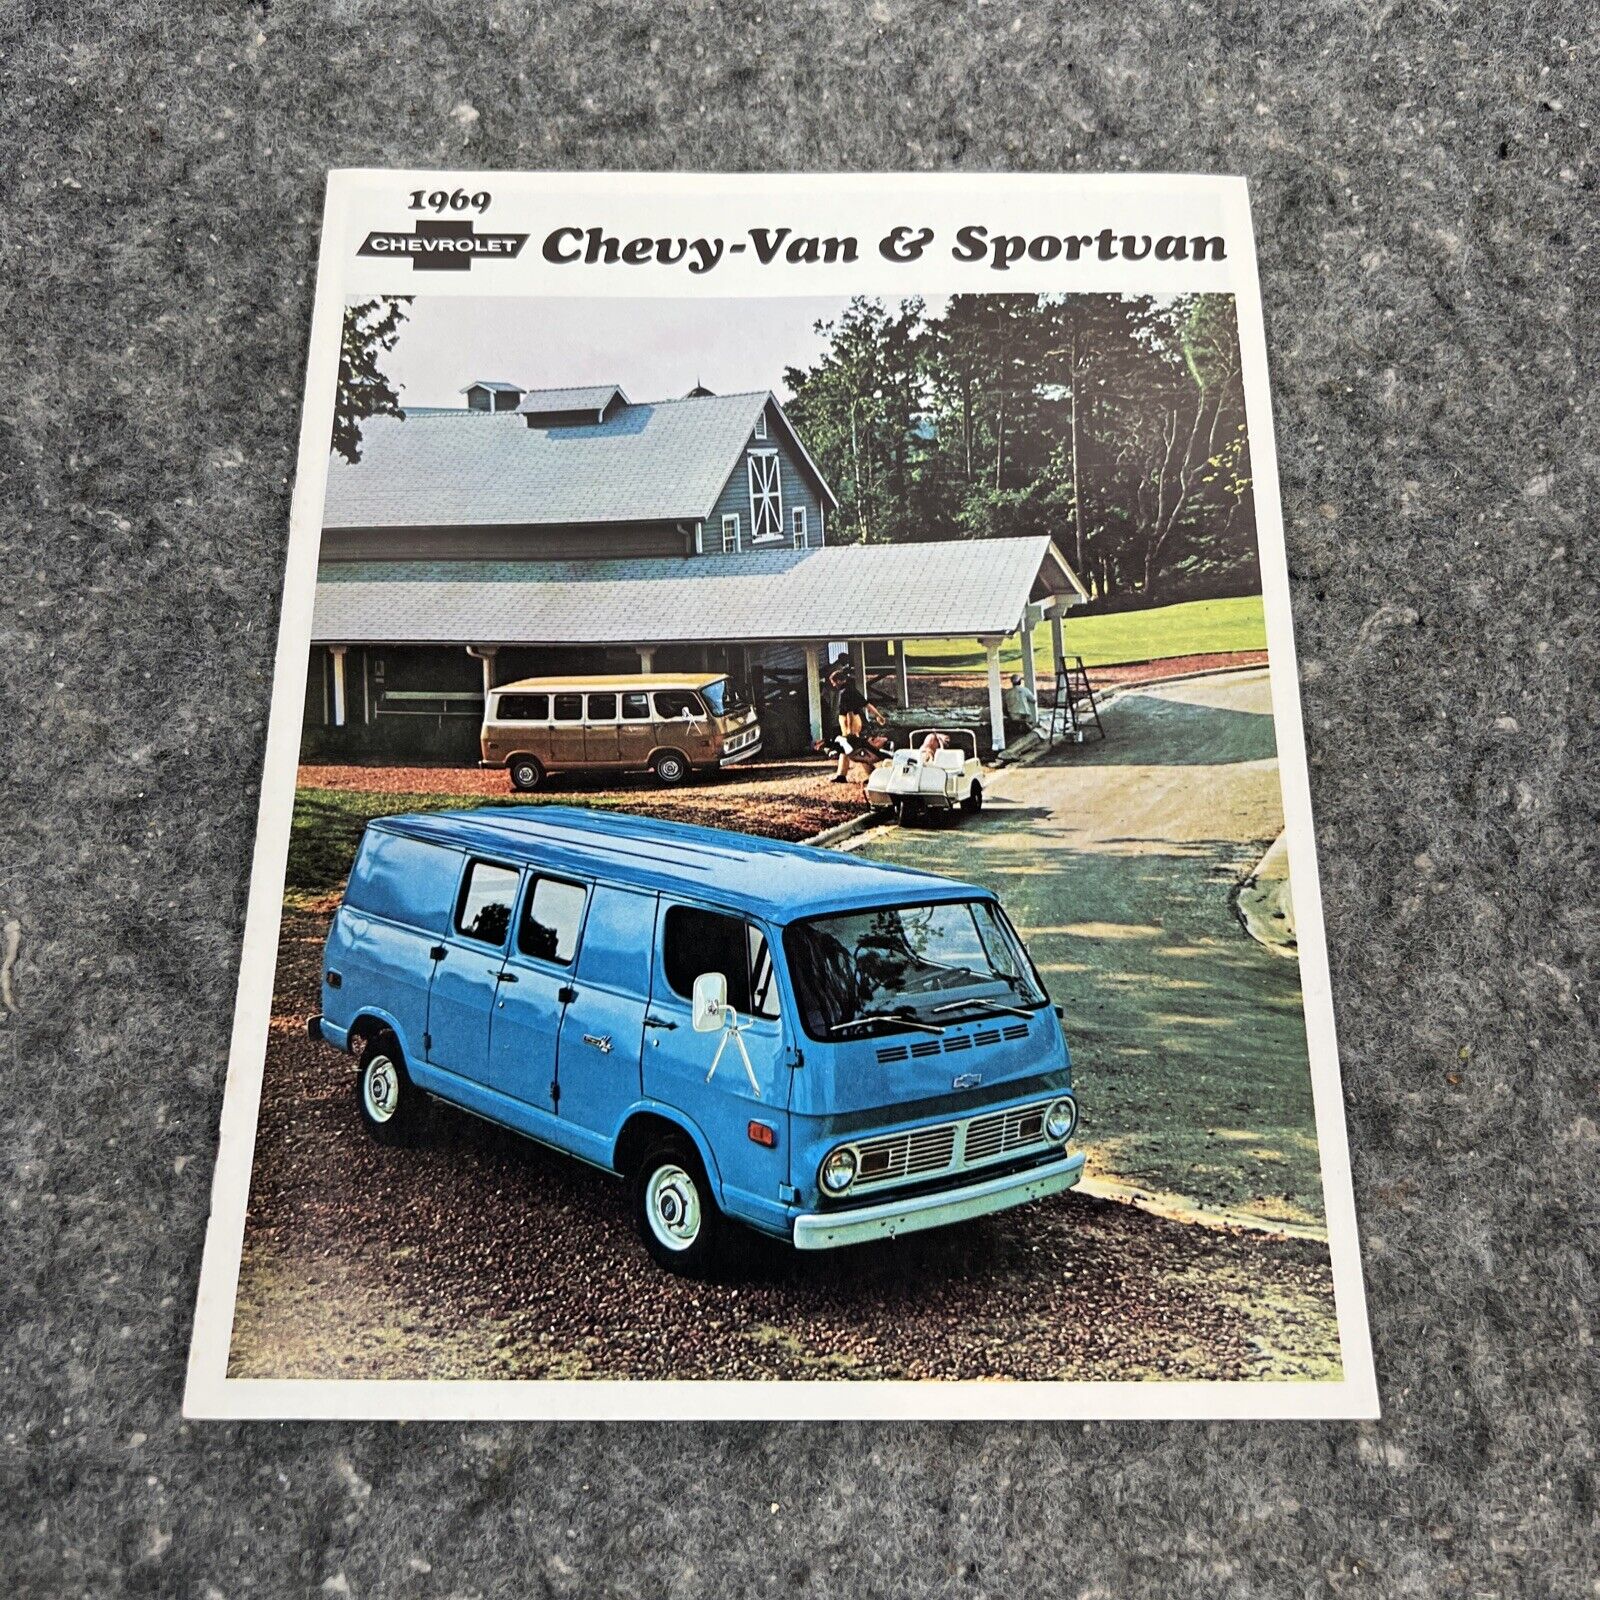 Original 1969 Chevrolet Chevy-Van & Sportvan Sales Brochure